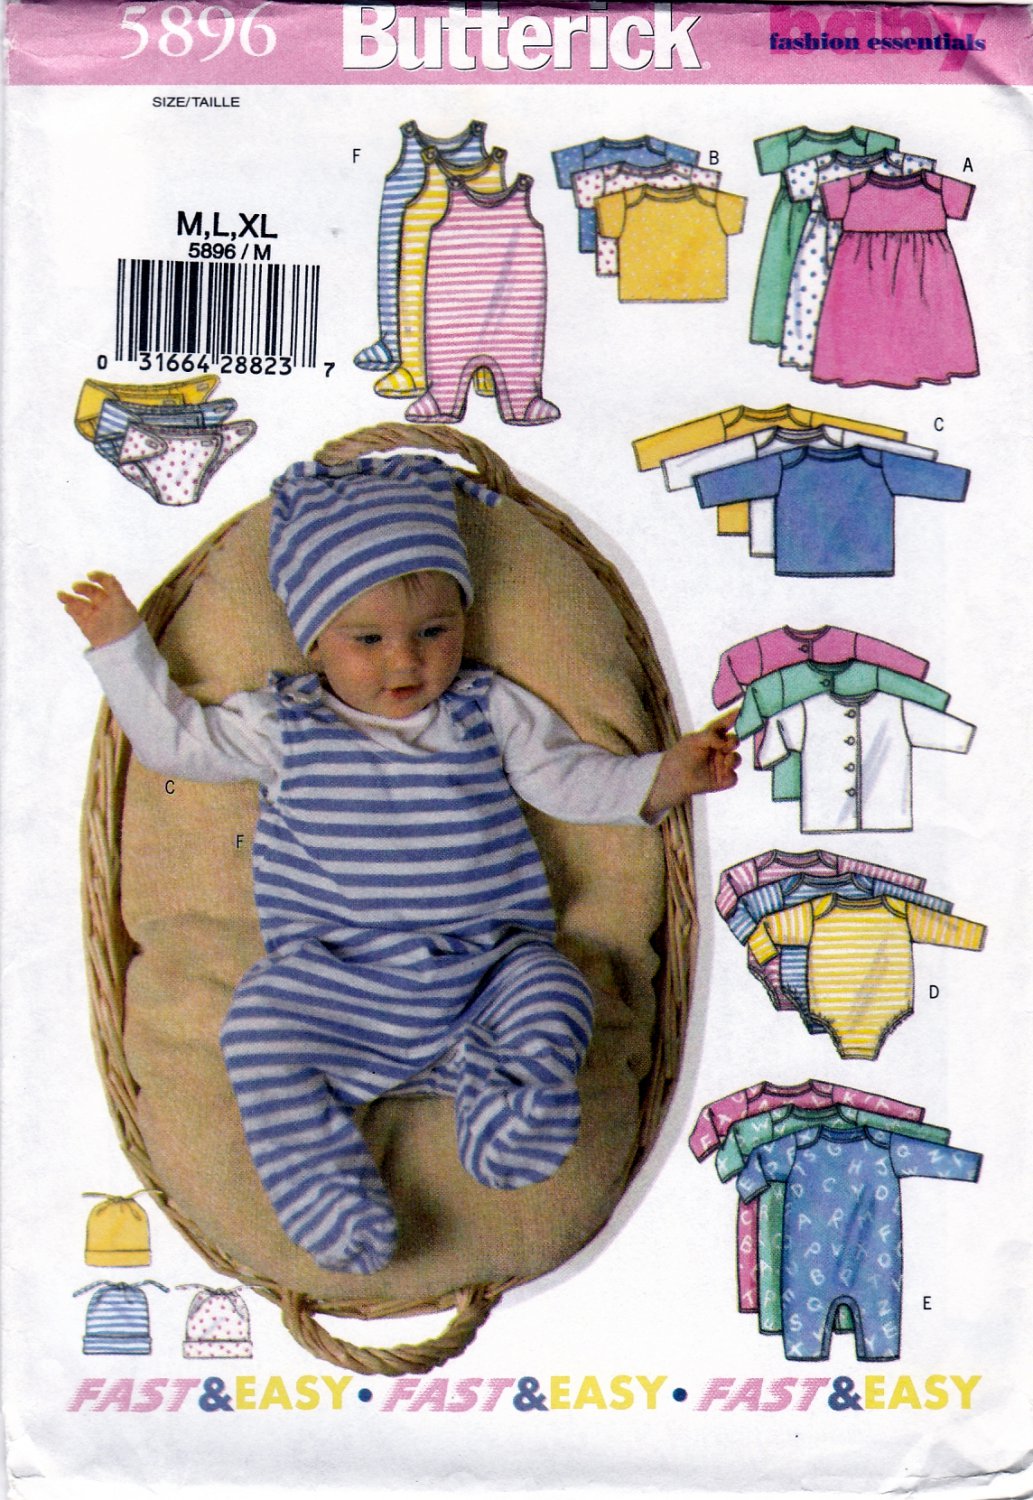 Butterick 5896 Infant Jacket Dress Top Romper Diaper Cover Hat Sewing Pattern Sizes M-L-XL